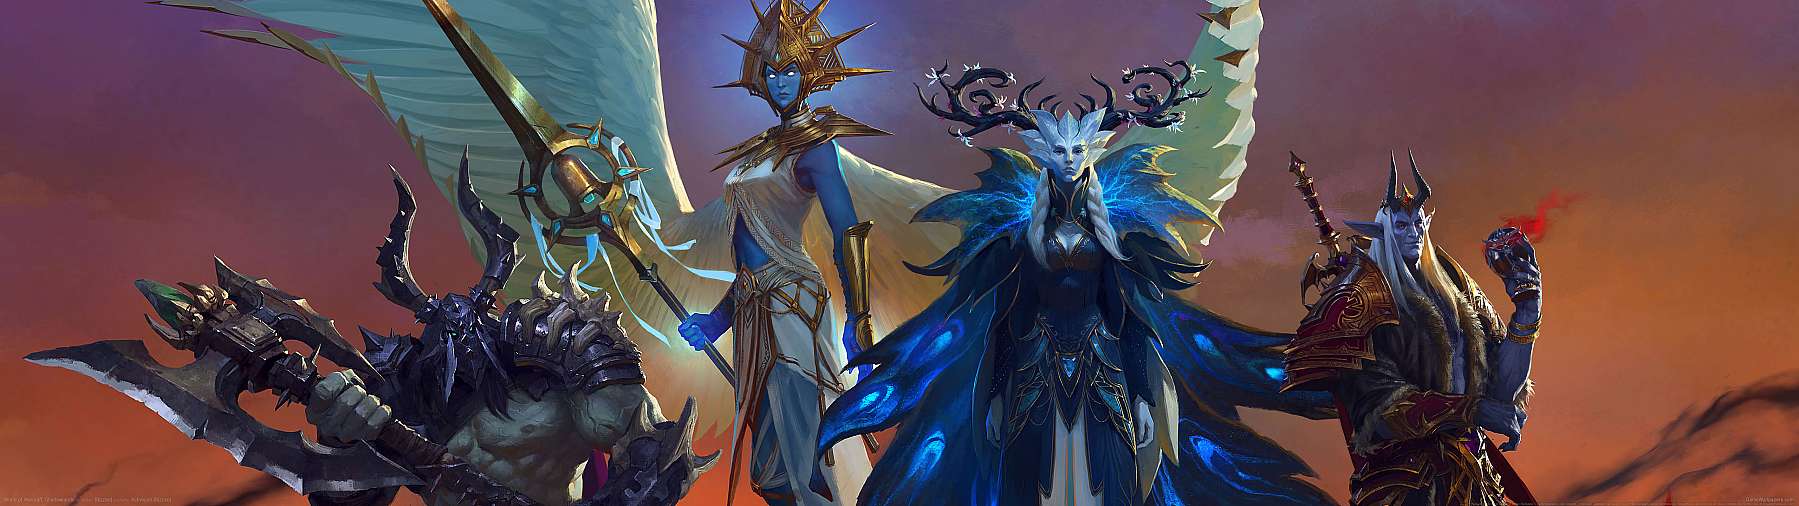 World of Warcraft: Shadowlands superwide fond d'cran 02